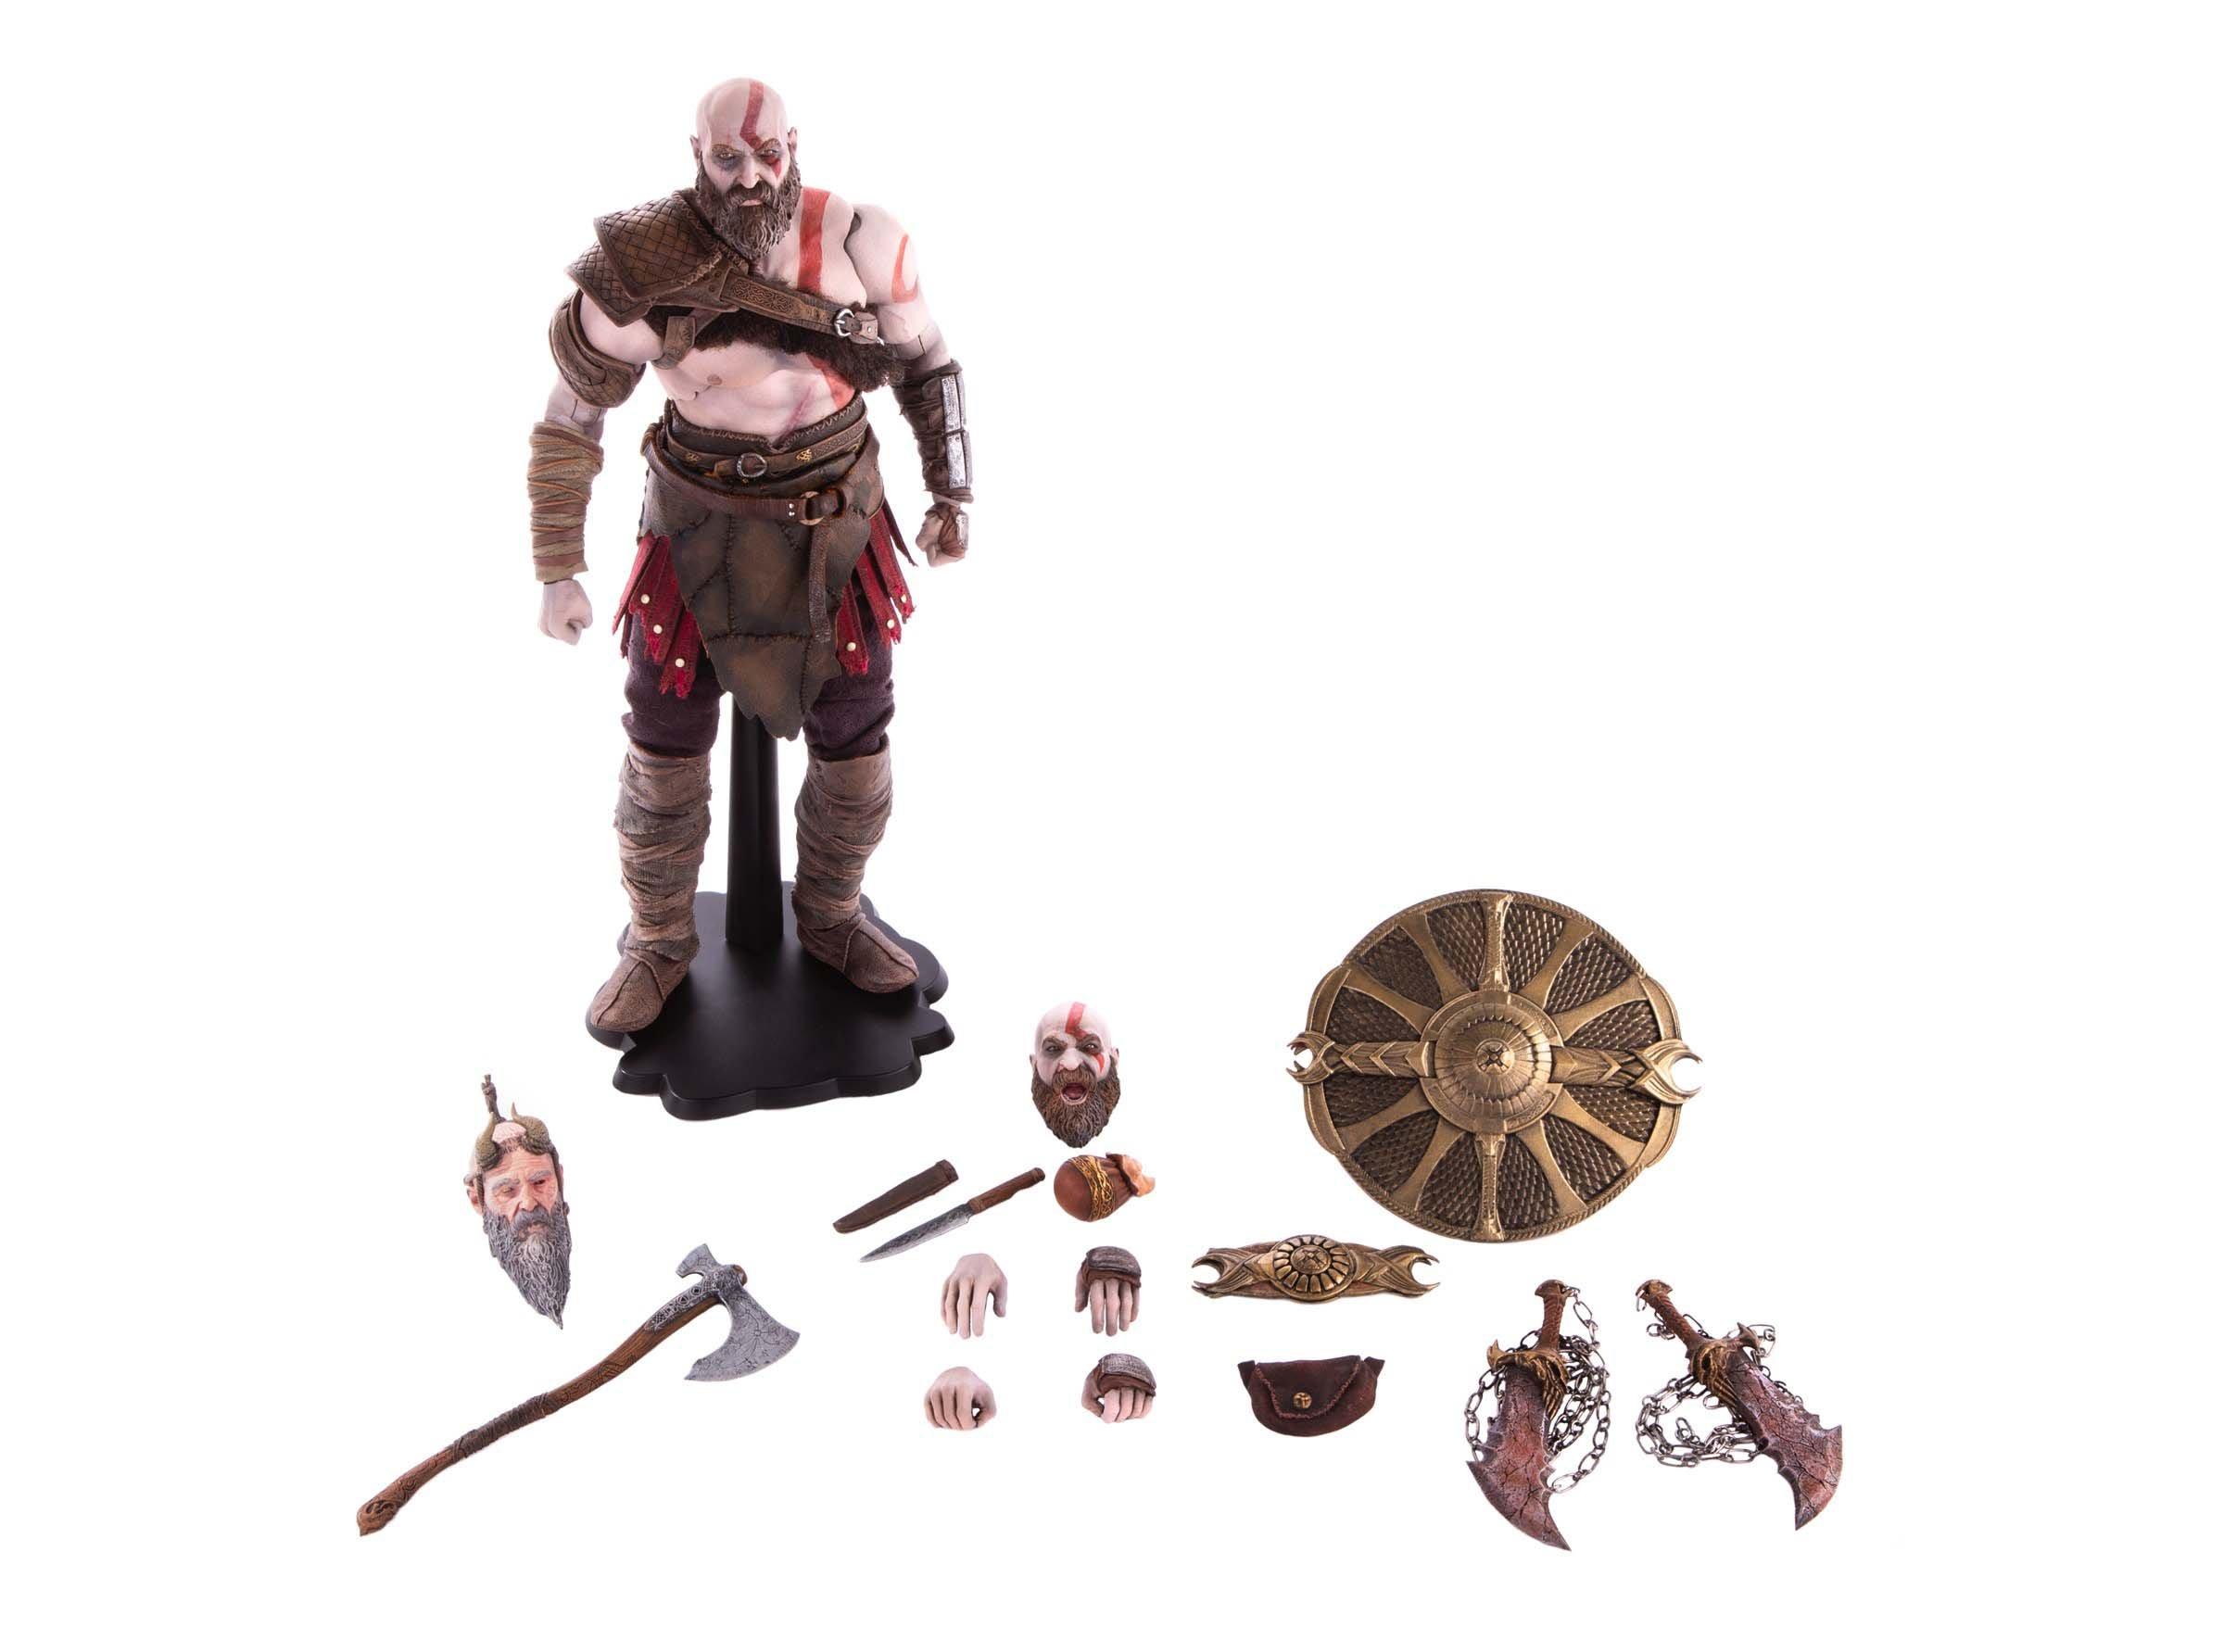 kratos figures